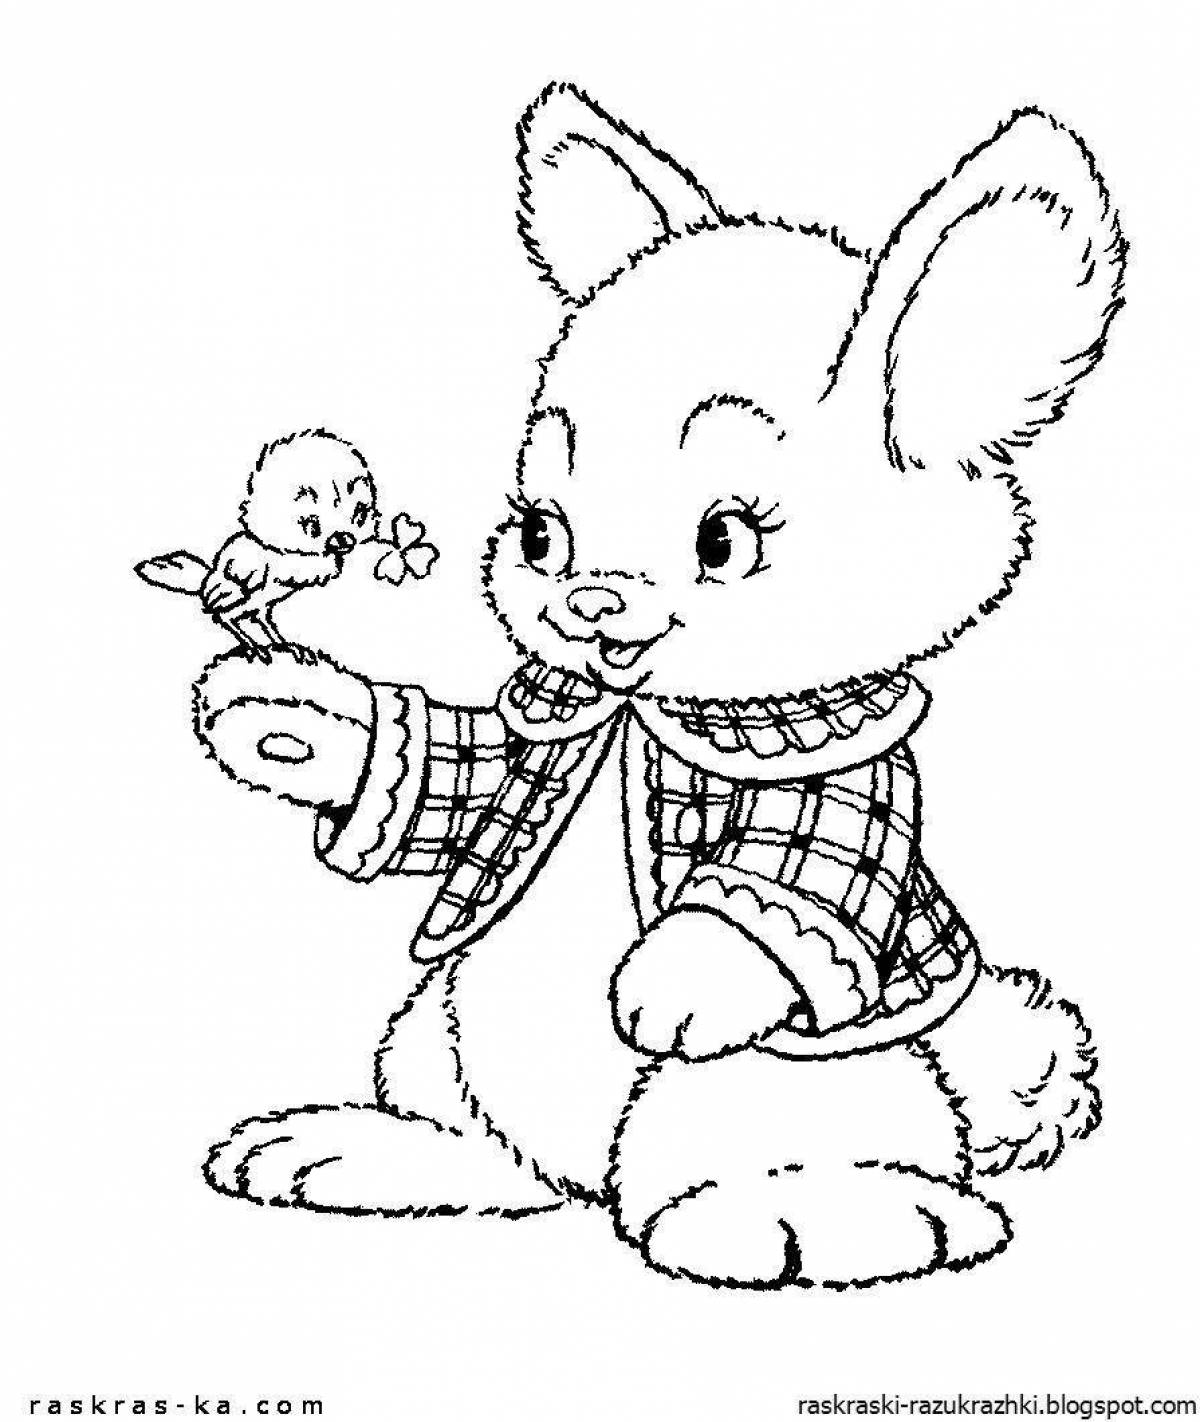 Fun coloring book for bunny girls